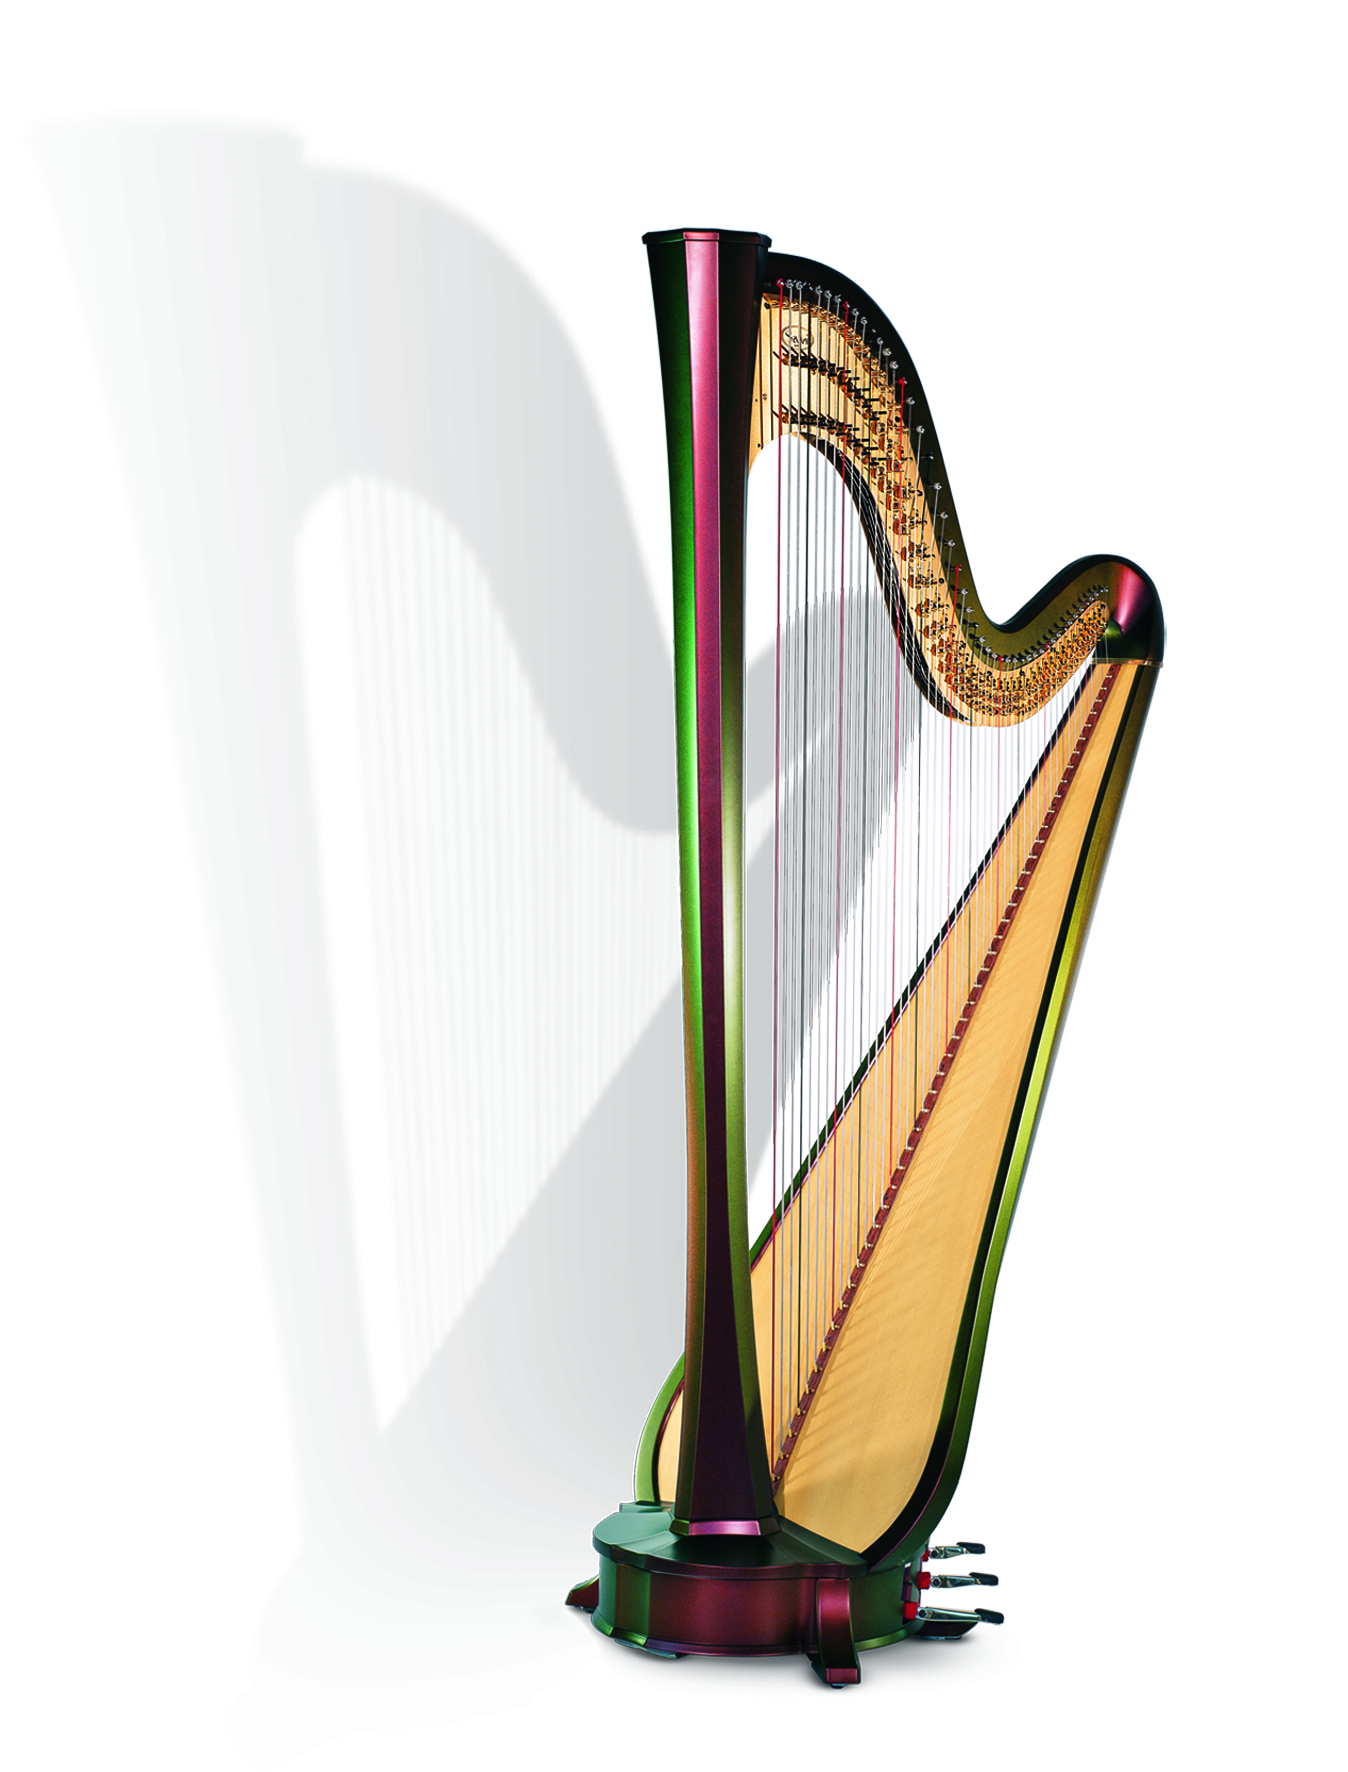 Salvi Pedal Harps Descriptions and Photos